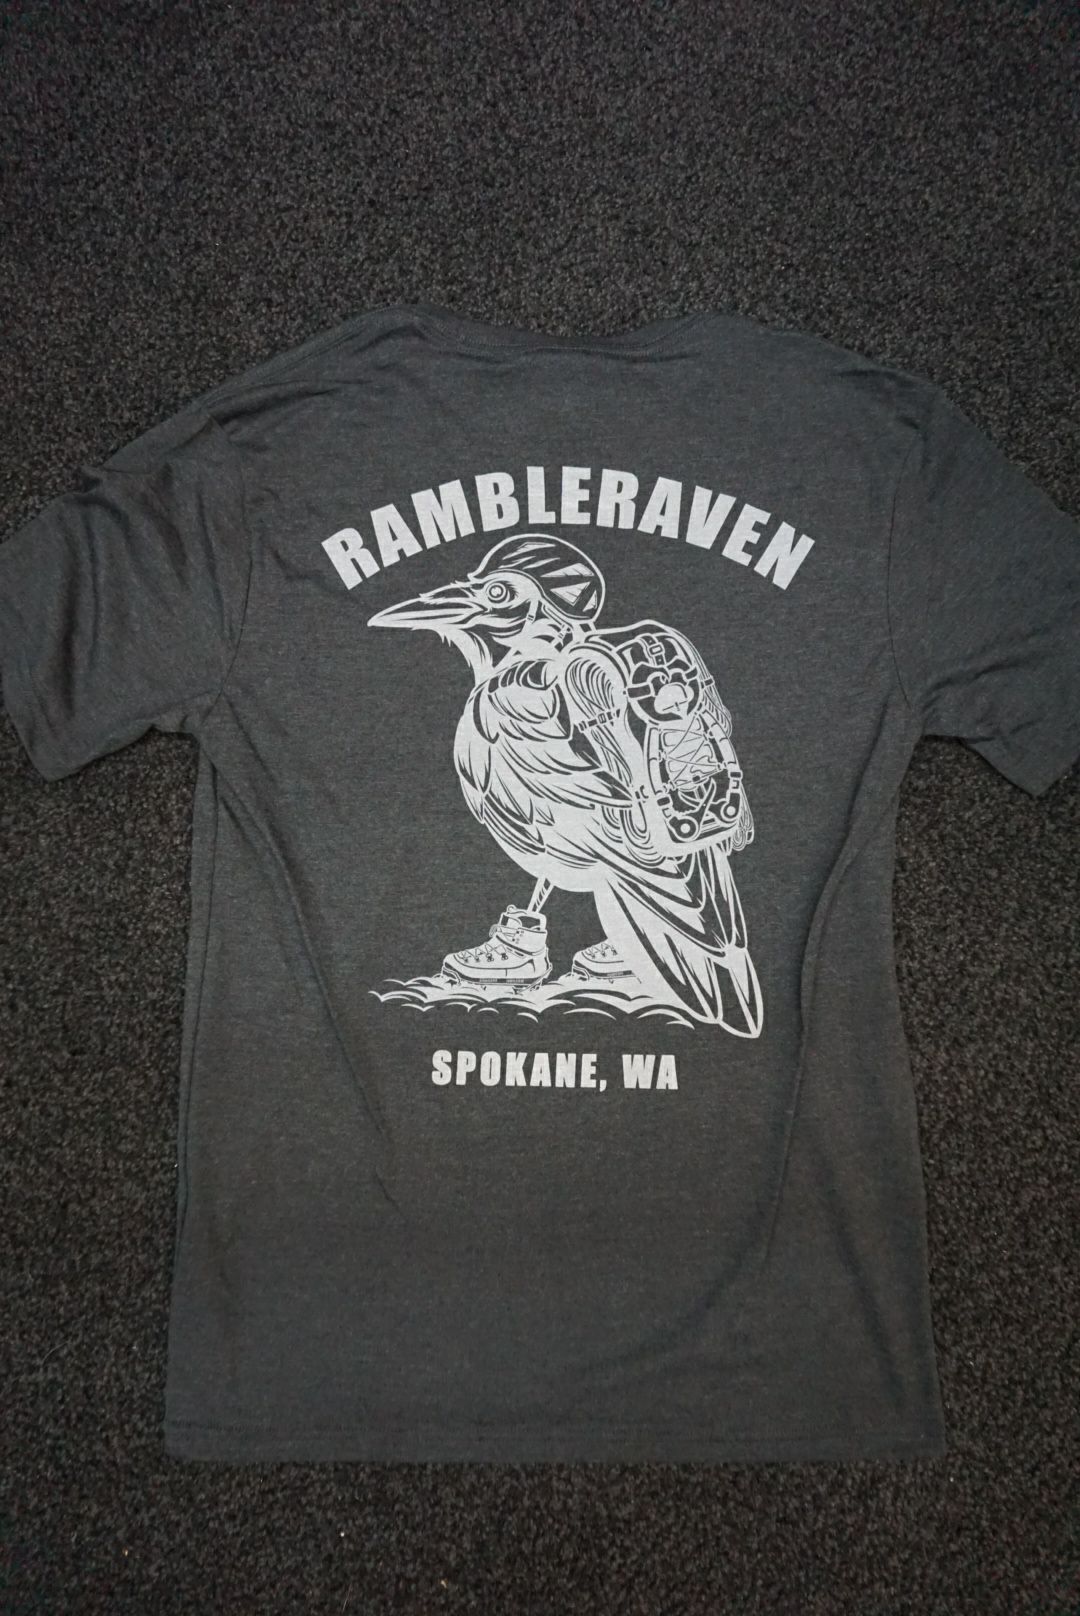 Mountaineering Raven Rambleraven T-Shirt